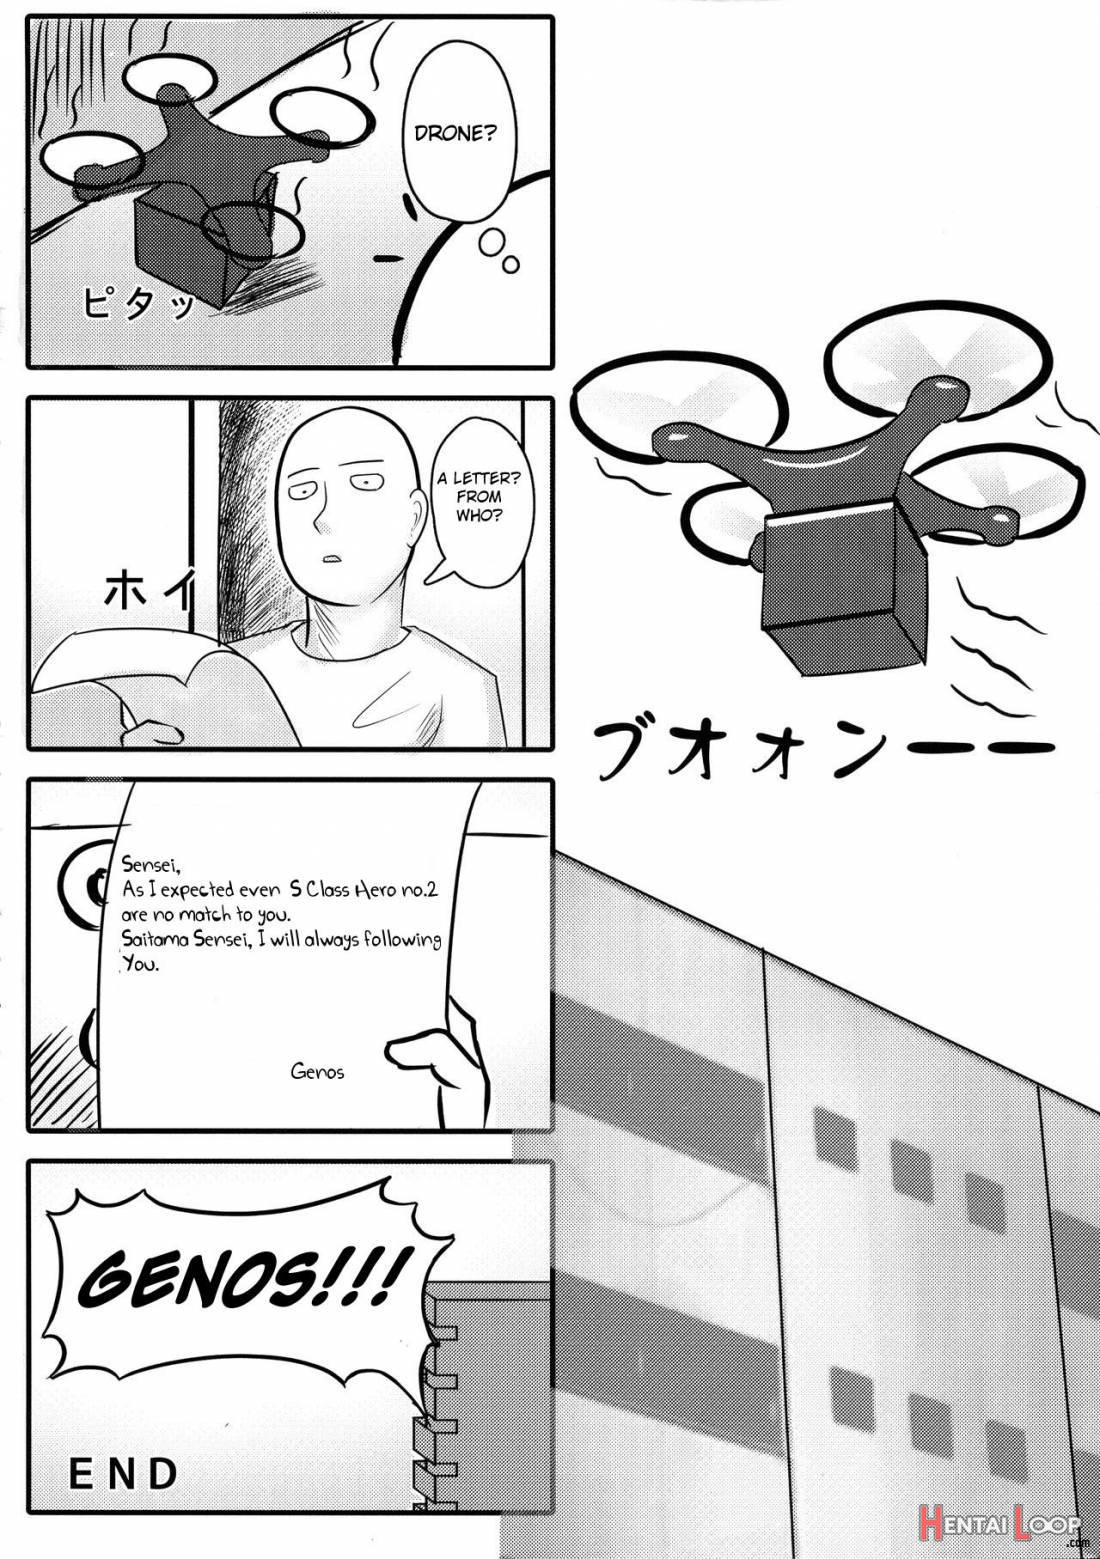 ONE PORNCH MAN Tatsumaki Shimai page 24